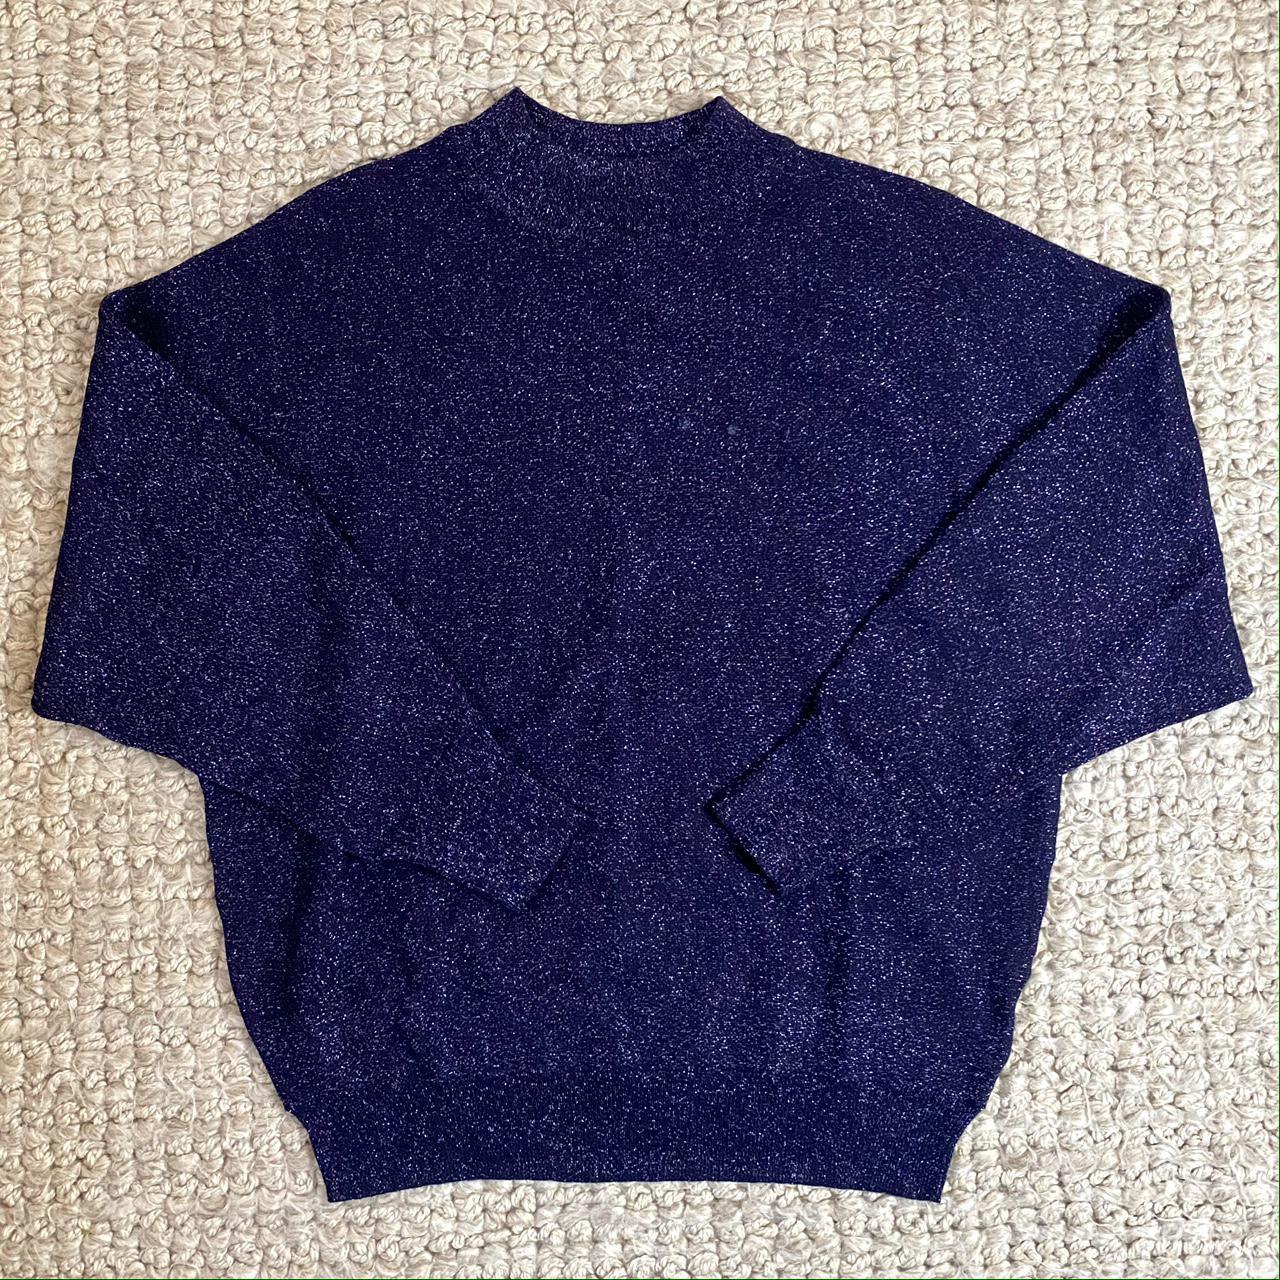 Sparkly jumper sweater - a colour in between dark... - Depop